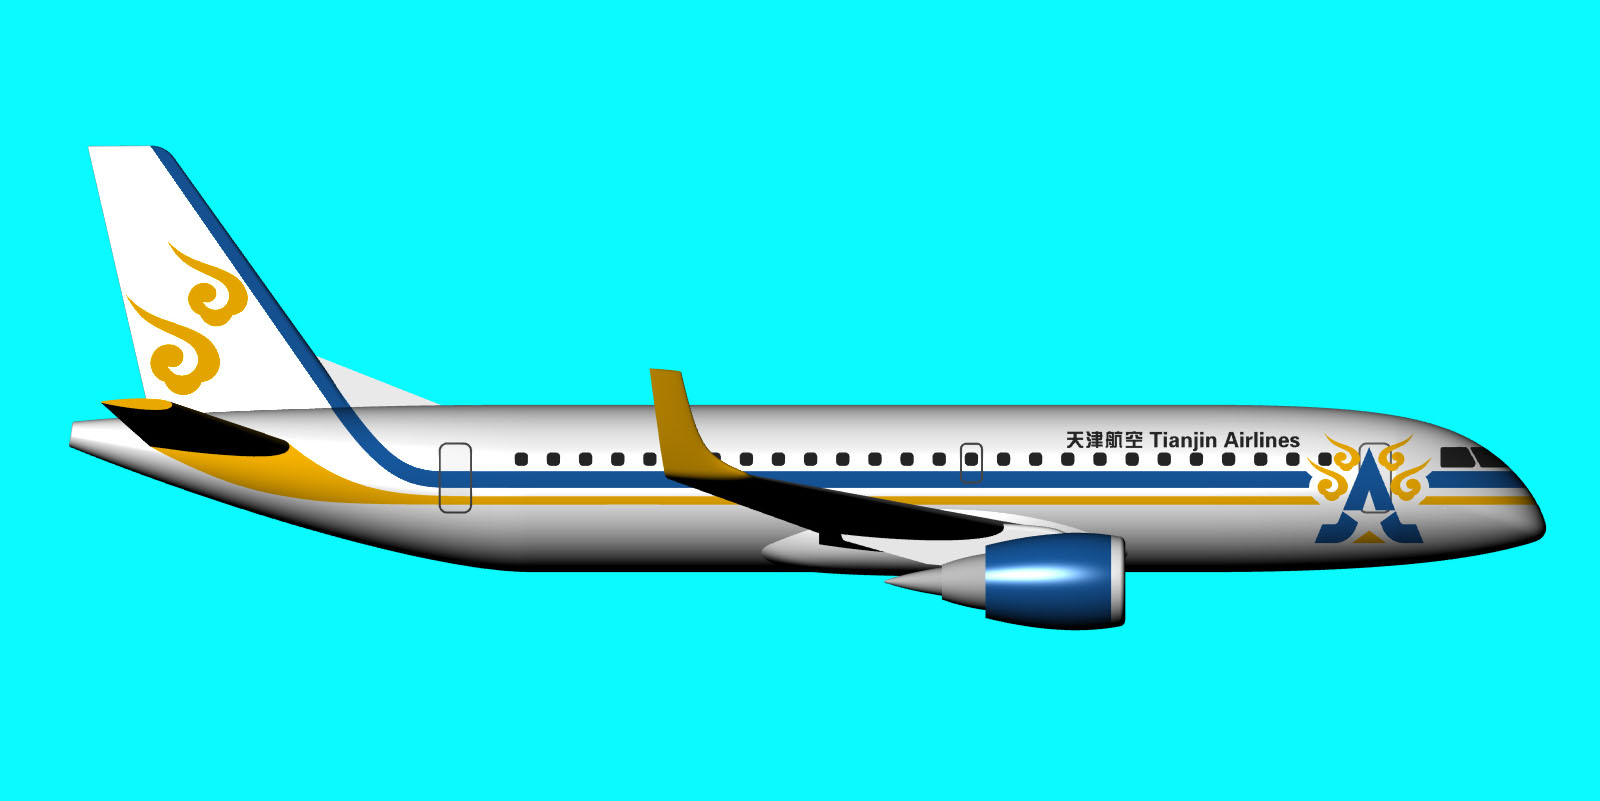 Plane-1.jpg